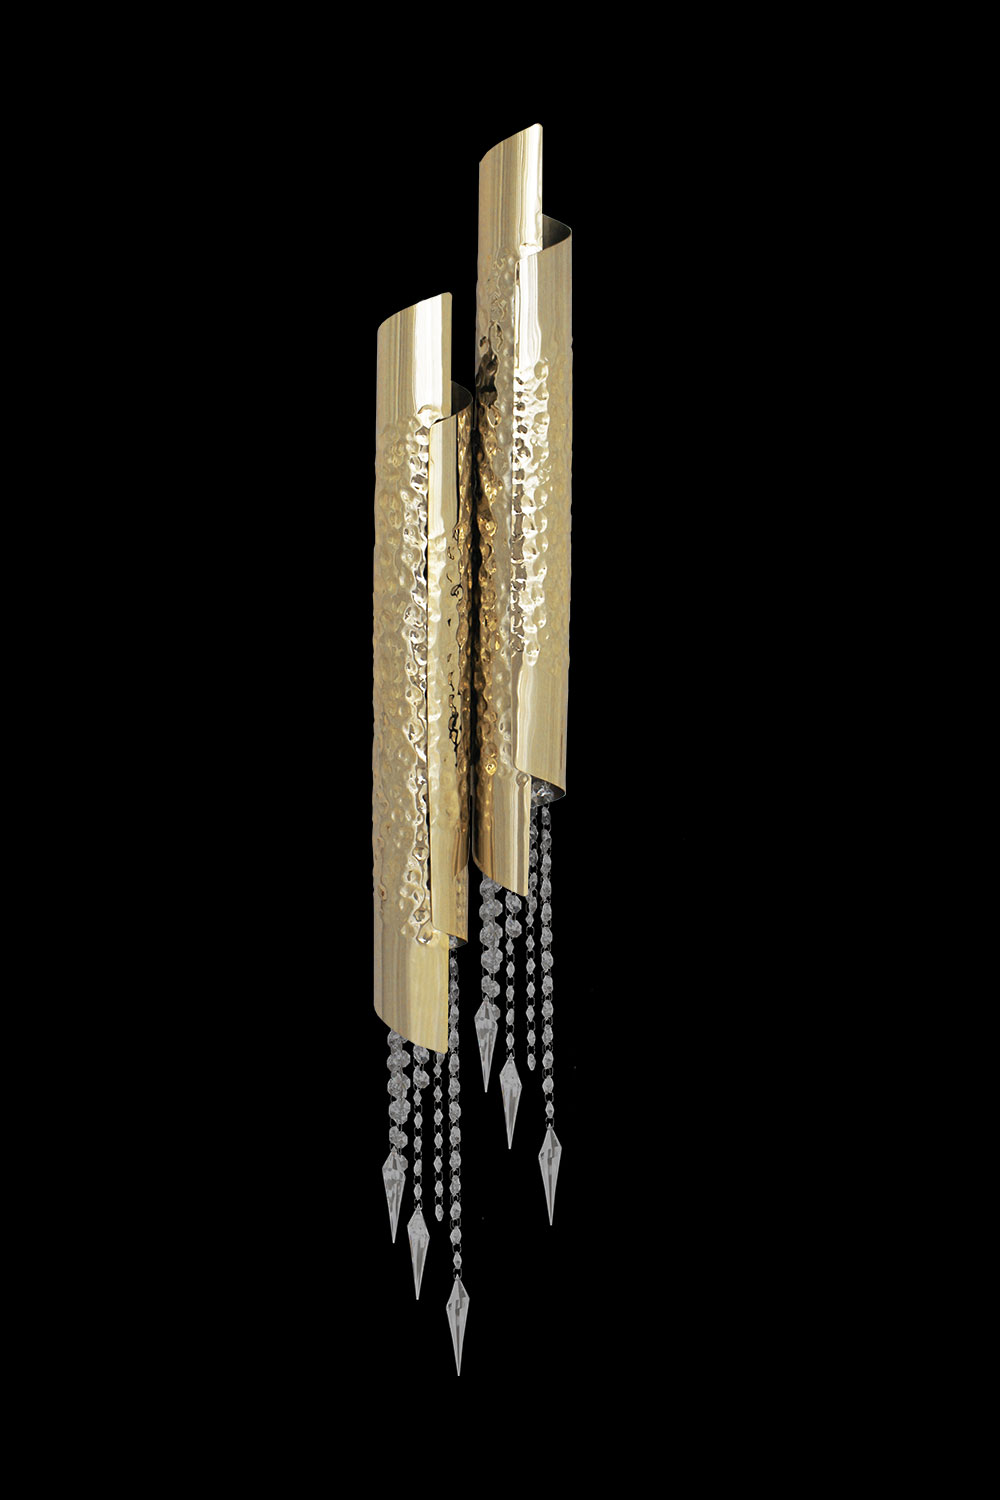 Avolto wall light in hammered gilded or nickel metal with Swarovski pendants-Madelia luxury lighting Paris